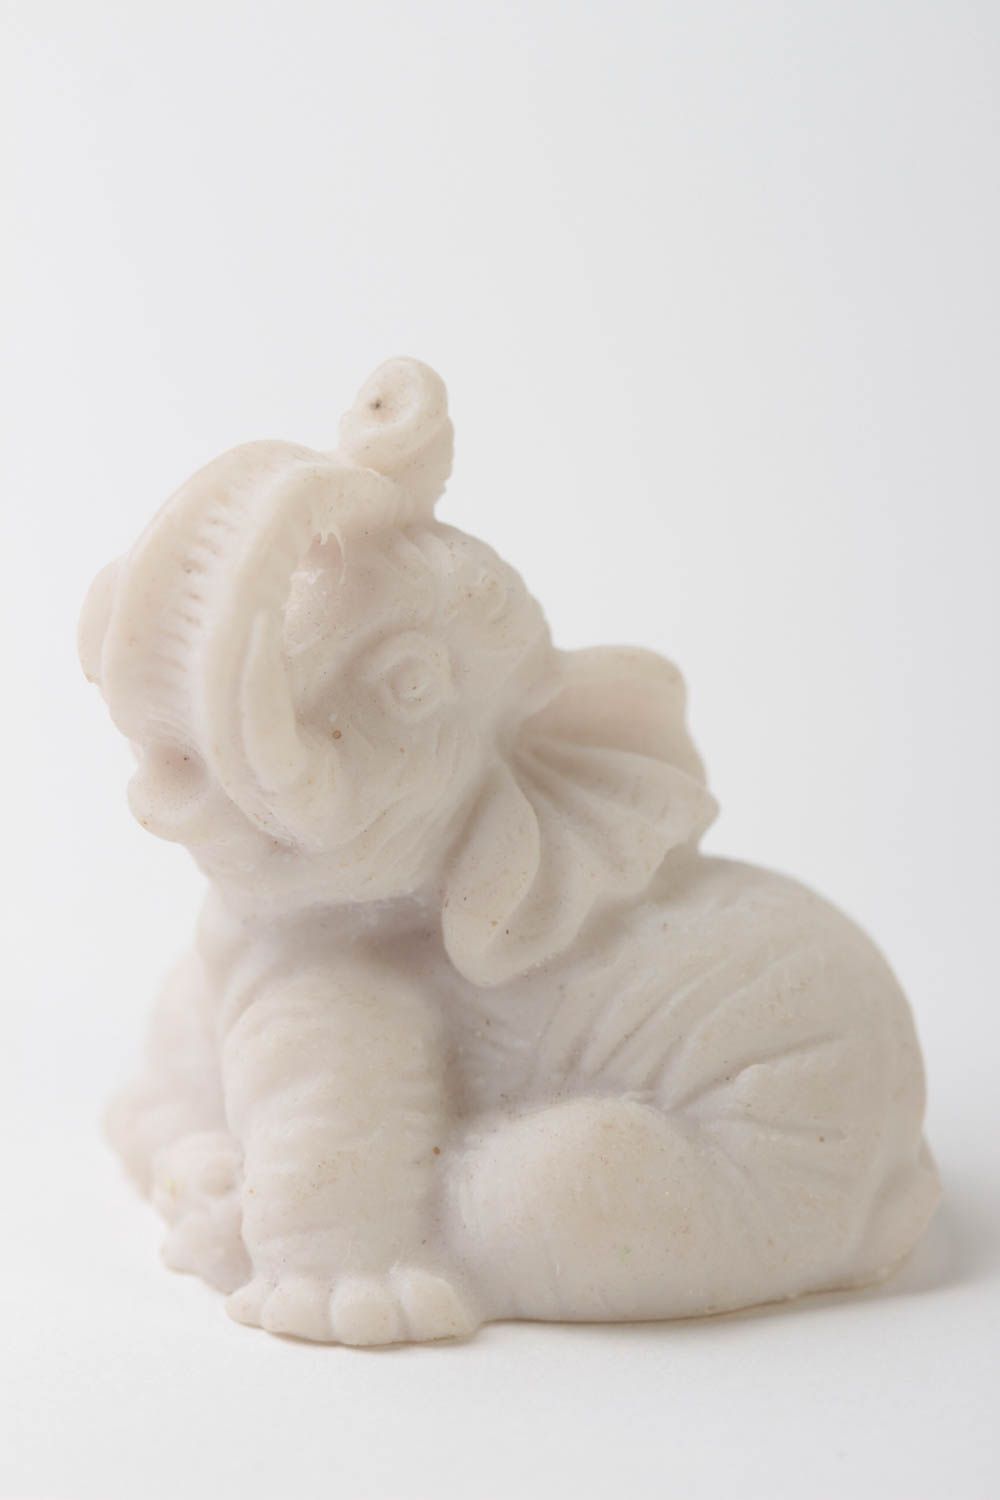 Handmade netsuke figurine art and craft contemporary sculpture diy crafts photo 3